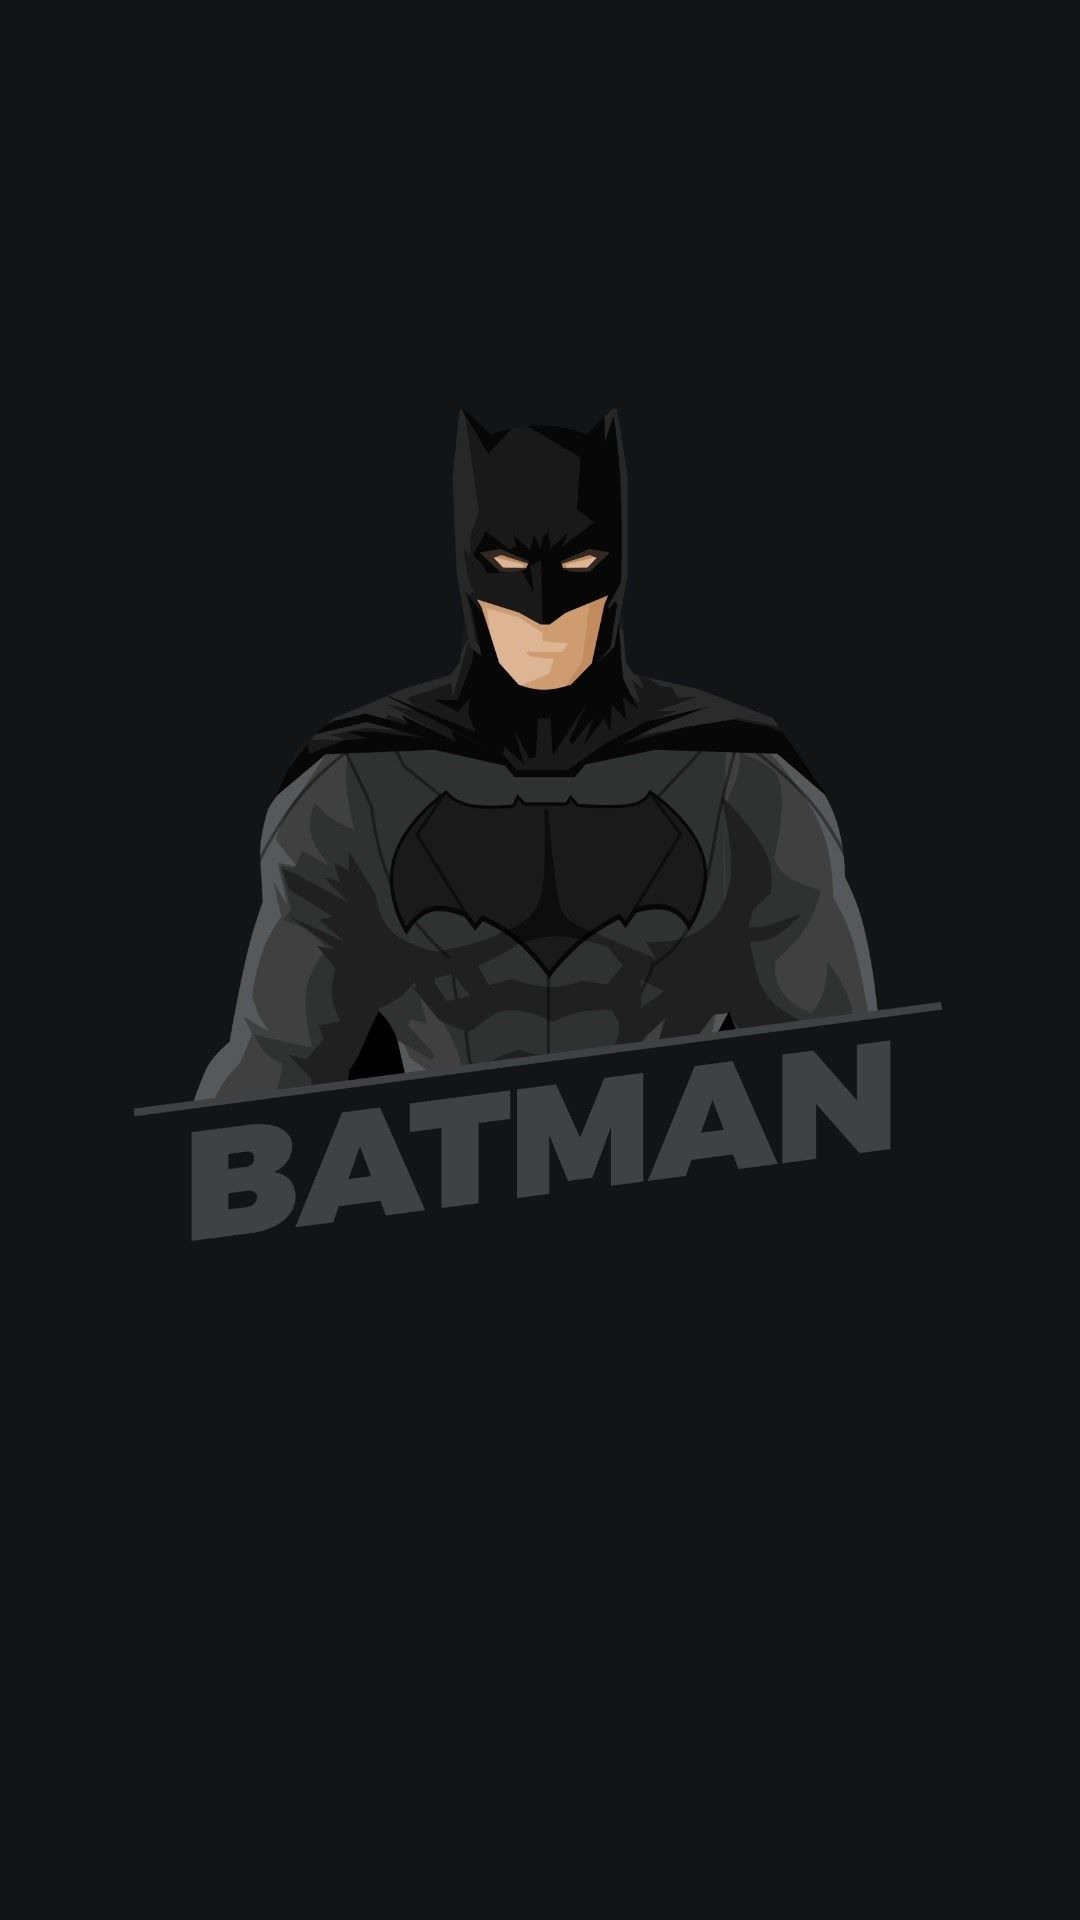 Batman Black Wallpaper, Download in Full HD from WallPixel App